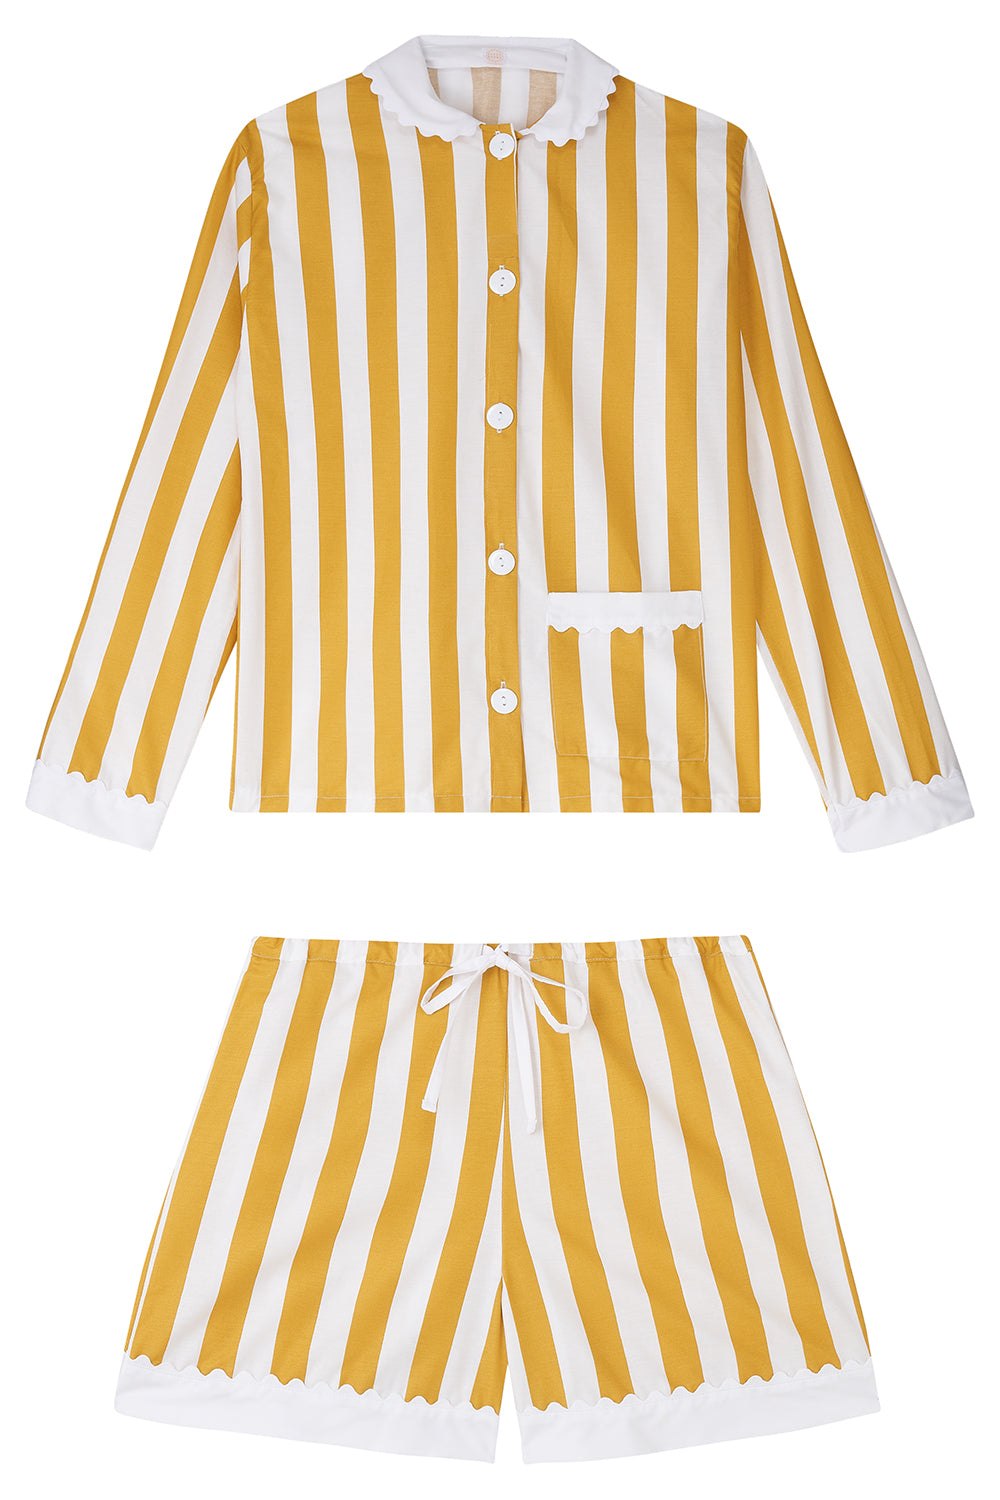 100% Cotton Poplin Ochre  & White Stripe Short Pyjamas with Side Pocket, White Collar and Cuffs Ric Rac Trim